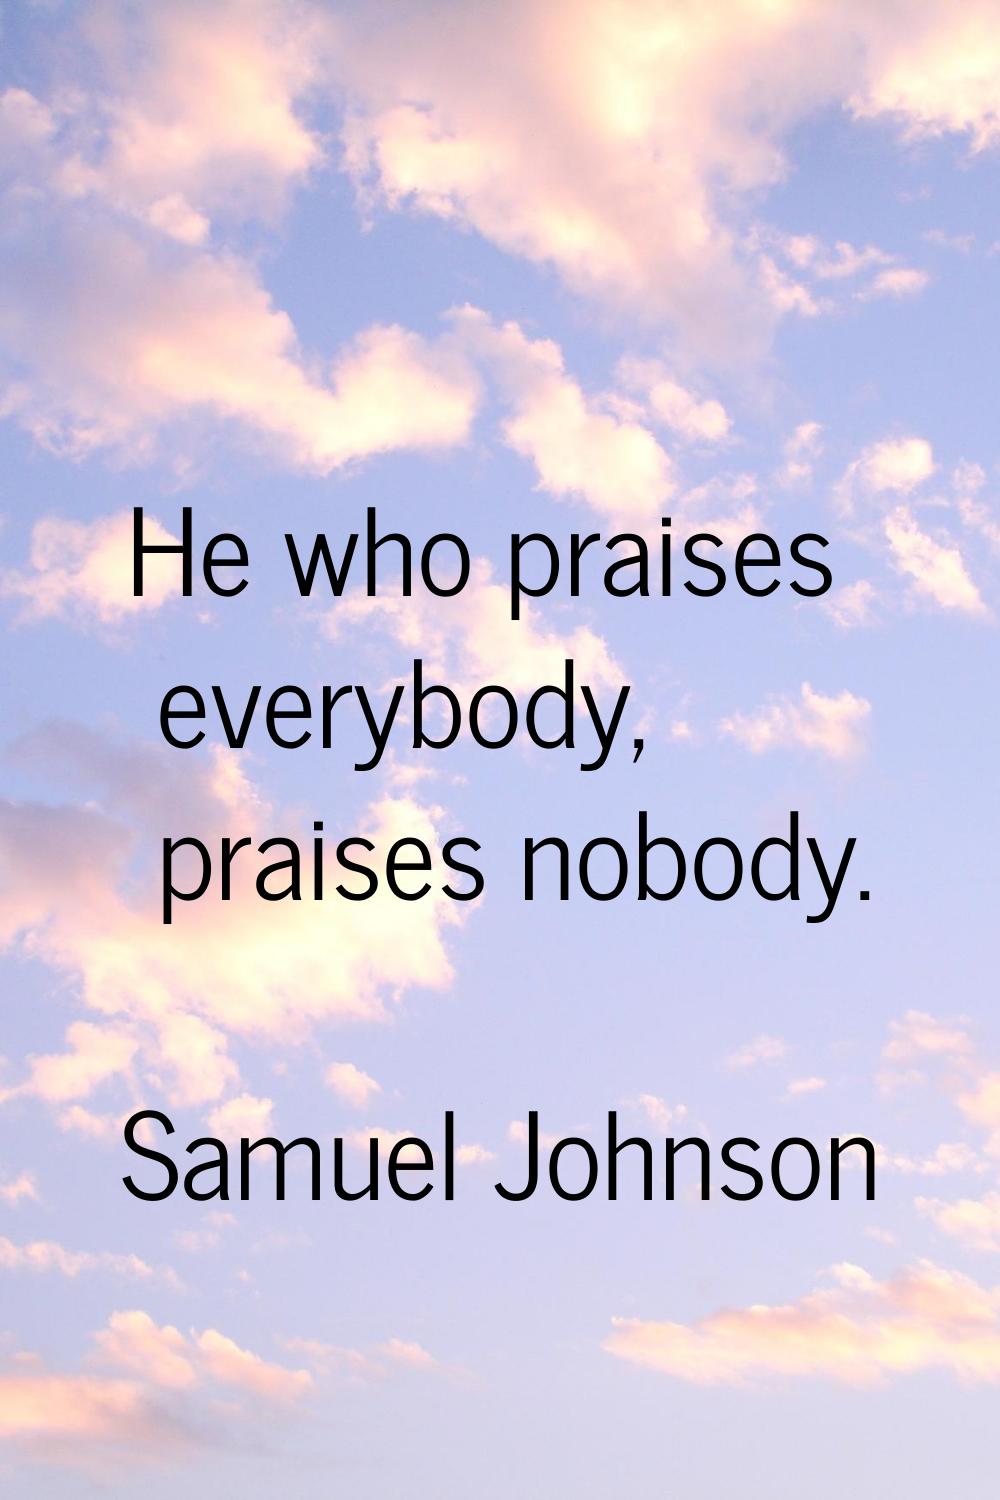 He who praises everybody, praises nobody.